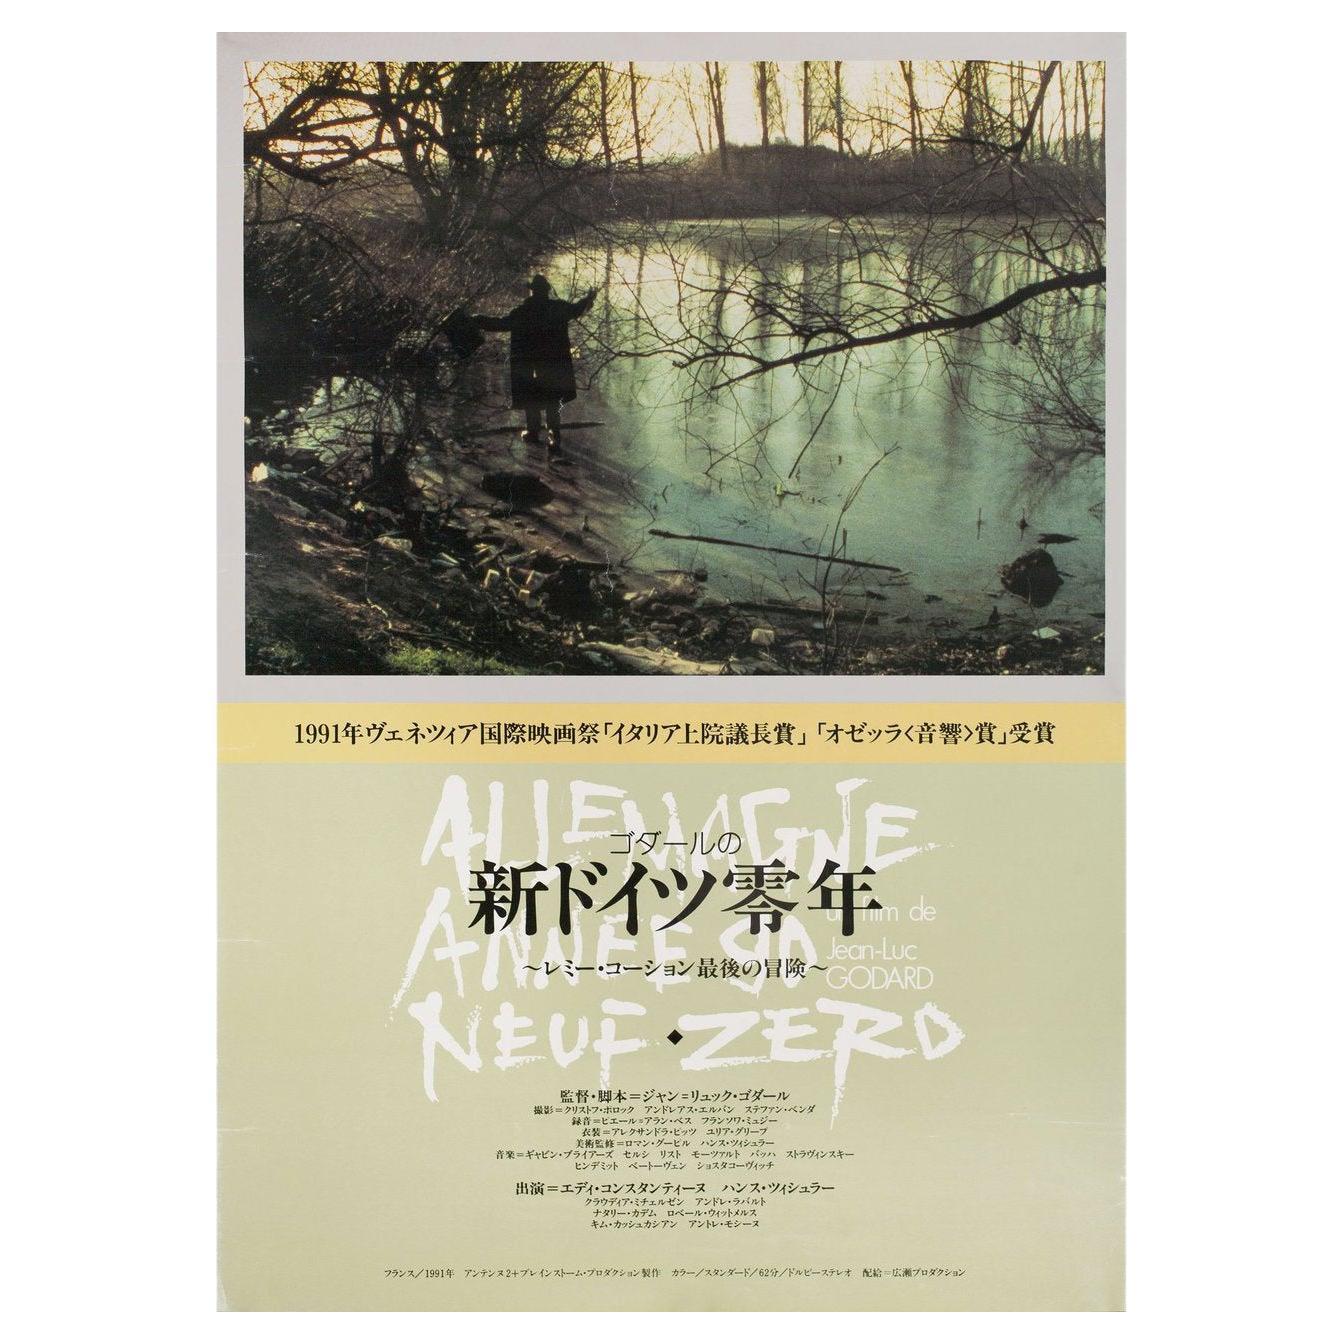 Germany Year 90 Nine Zero 1991 Japanese B2 Film Poster